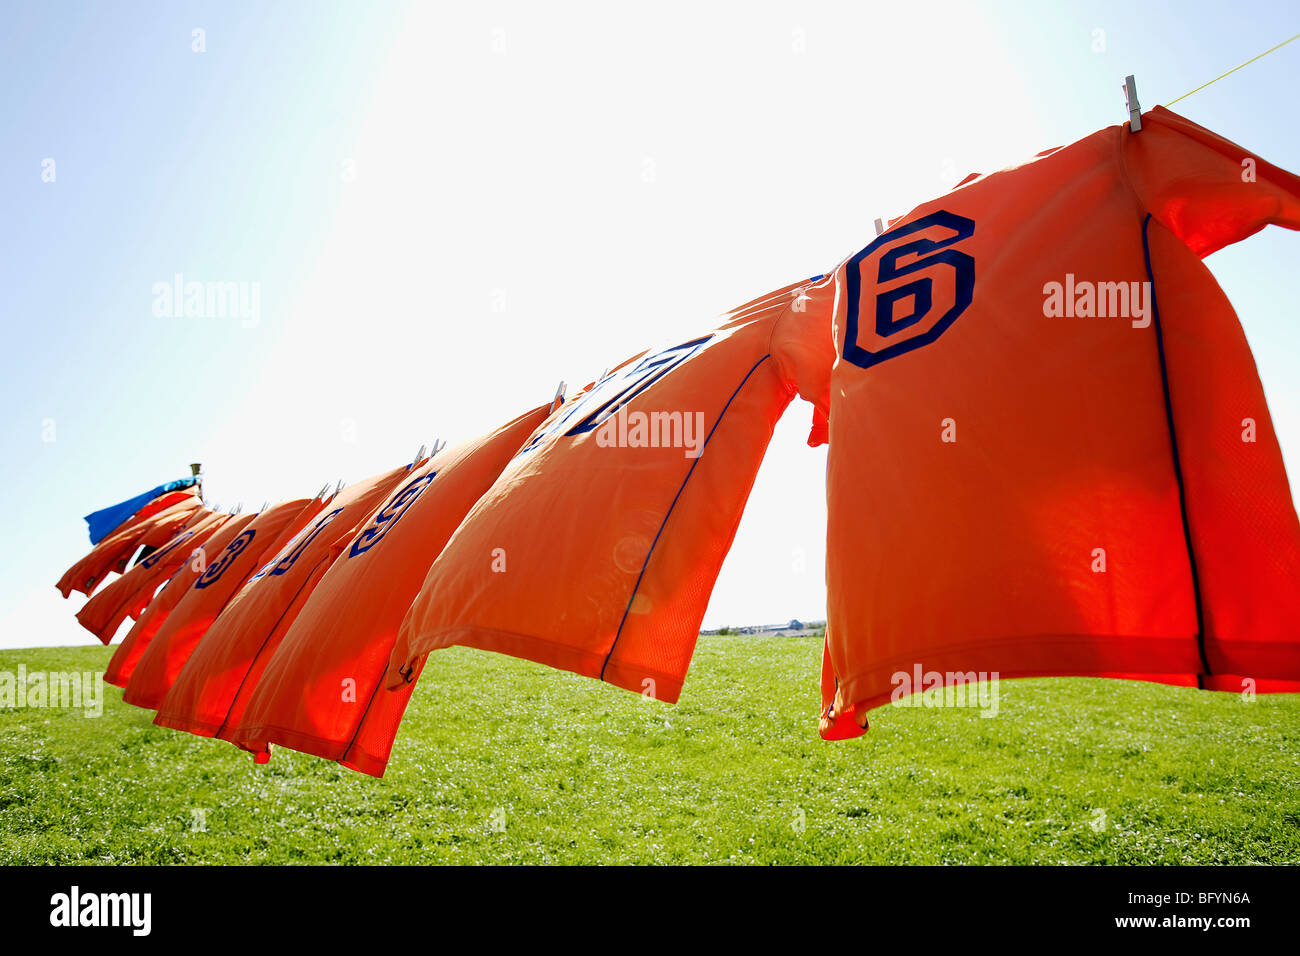 football dresses hanging on clothesline Stock Photo